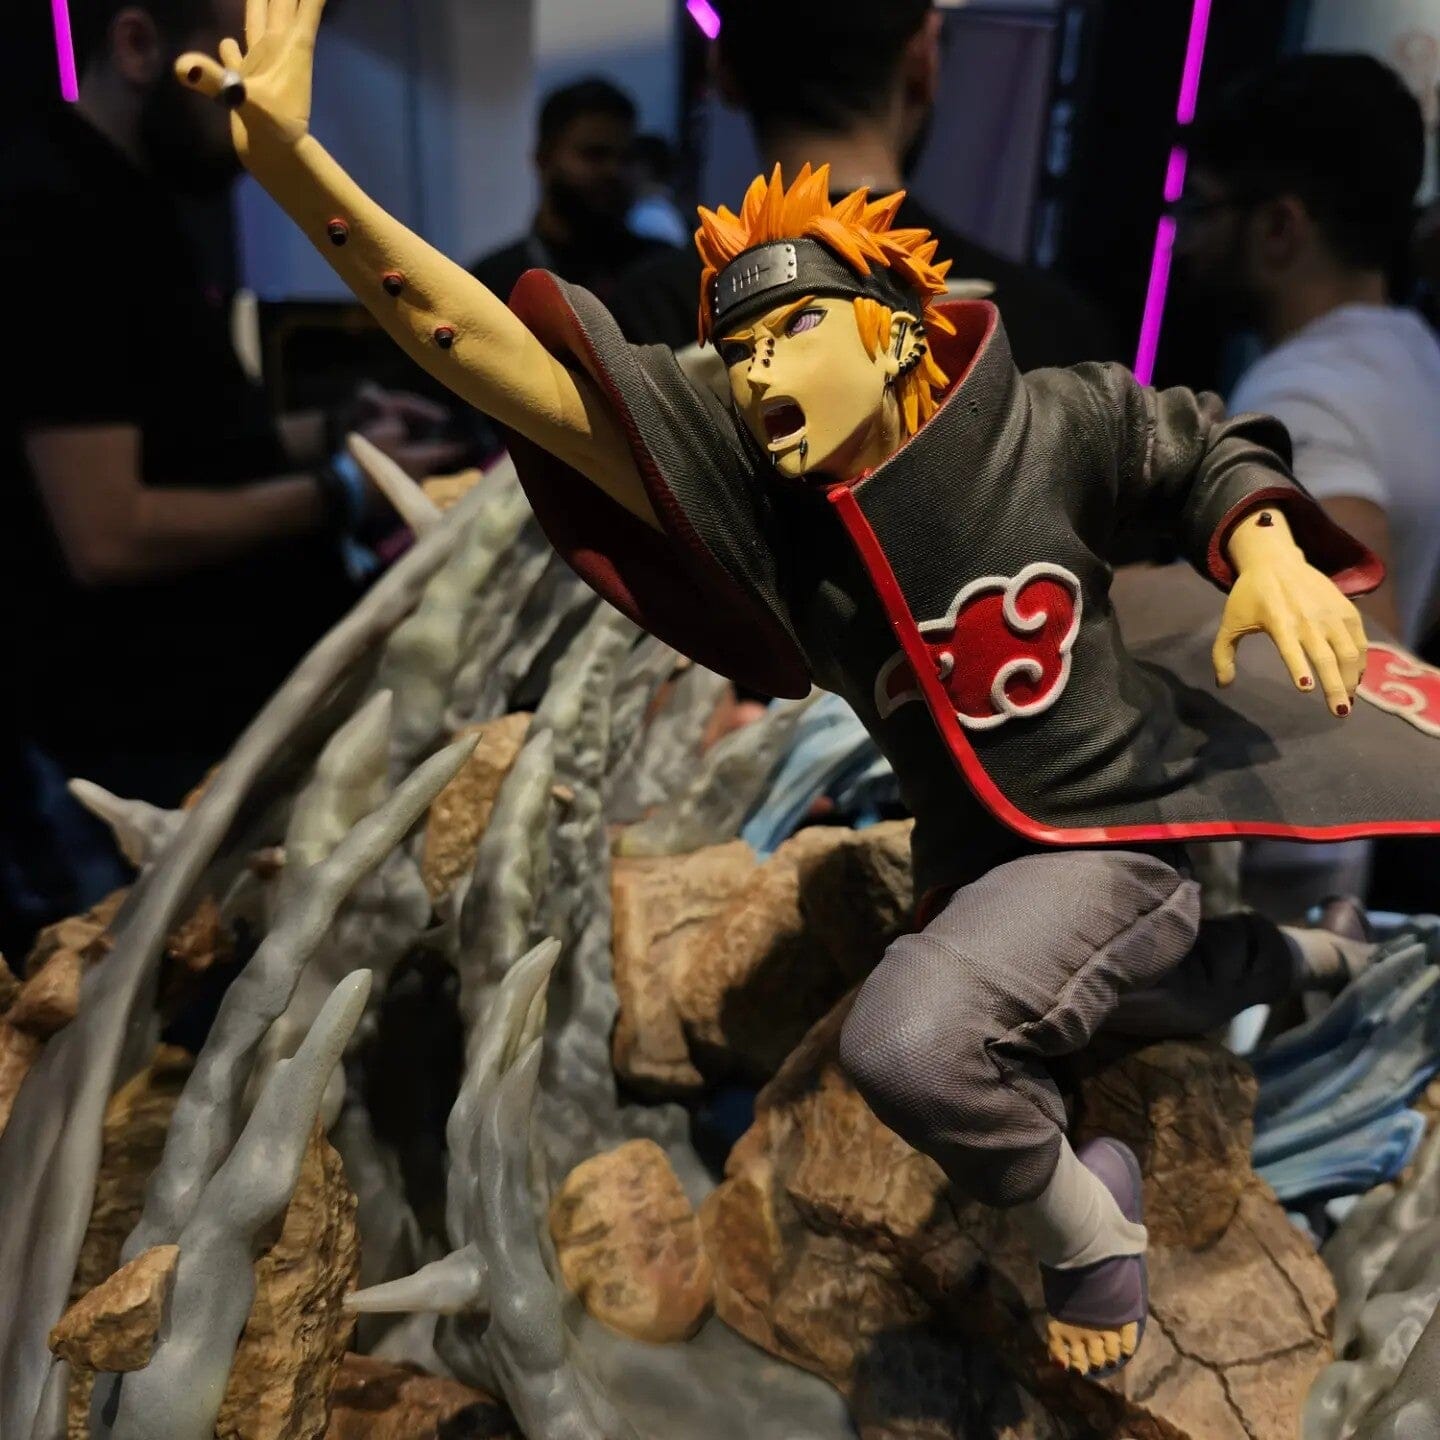 Naruto VS. Pain Elite Fandom Statue Resin Figures Figurama Collectors 